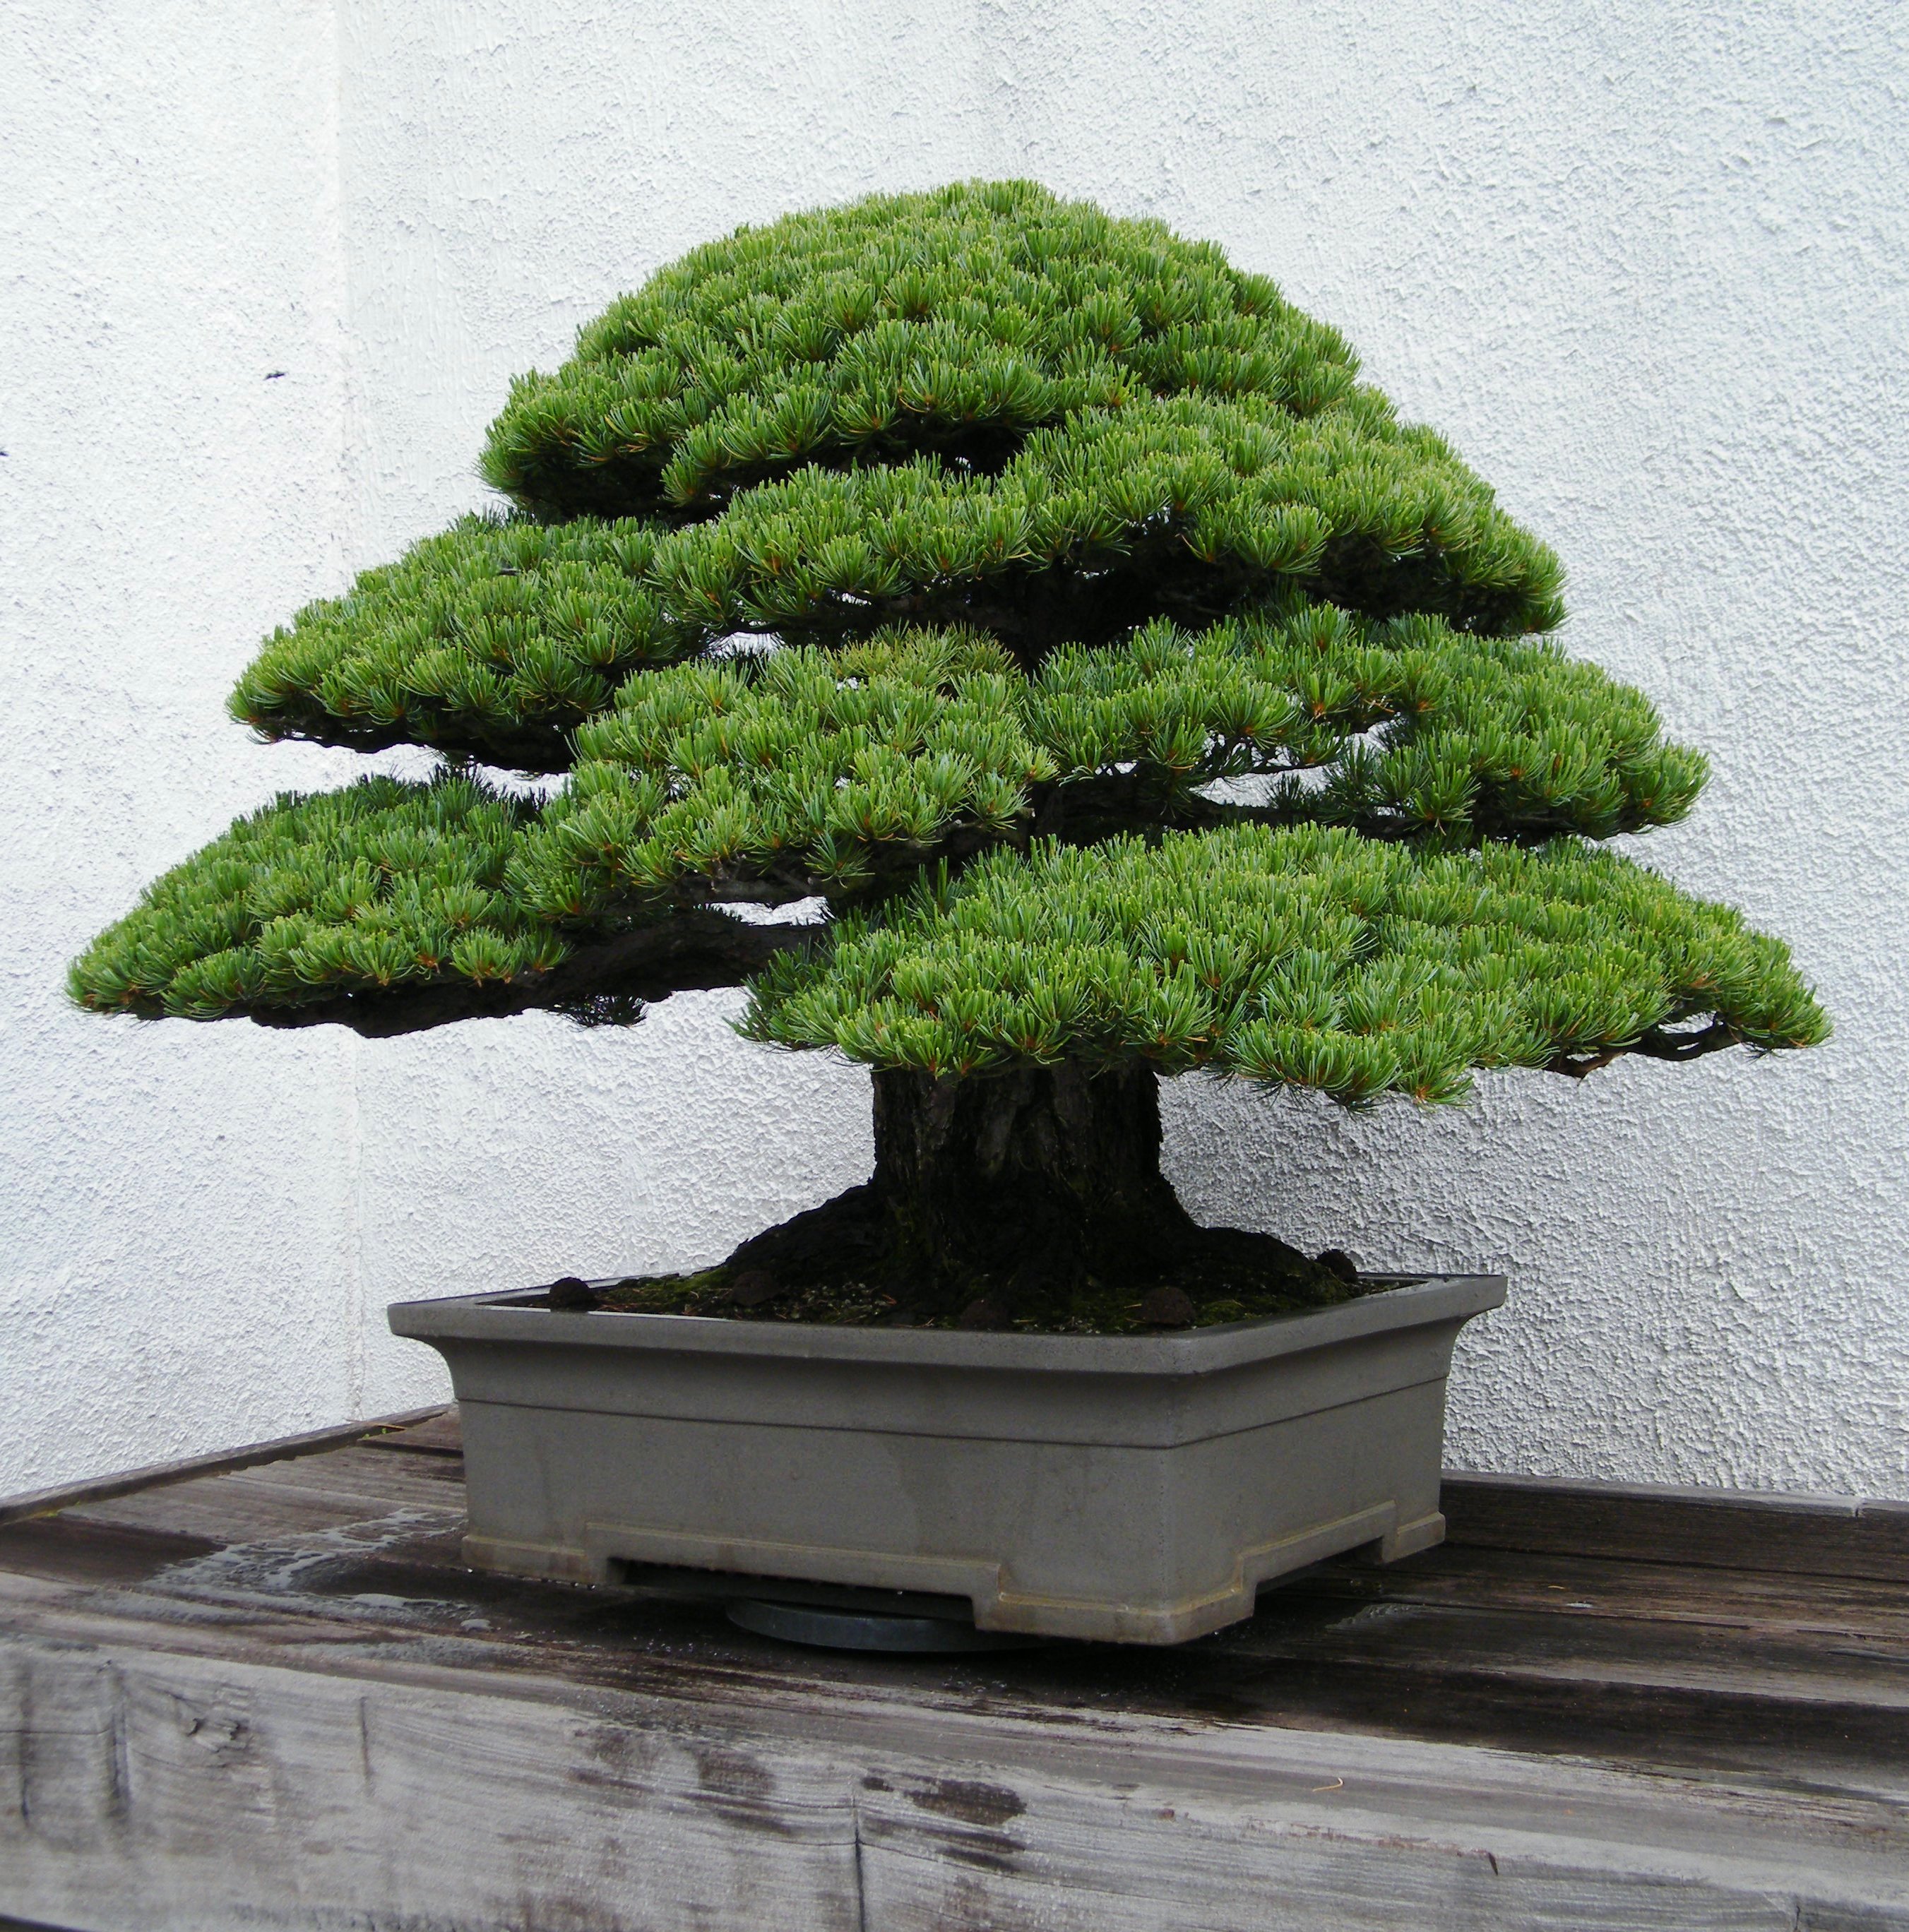 File:Japanese White Pine at National Bonsai & Penjing Museum, May 29 ...